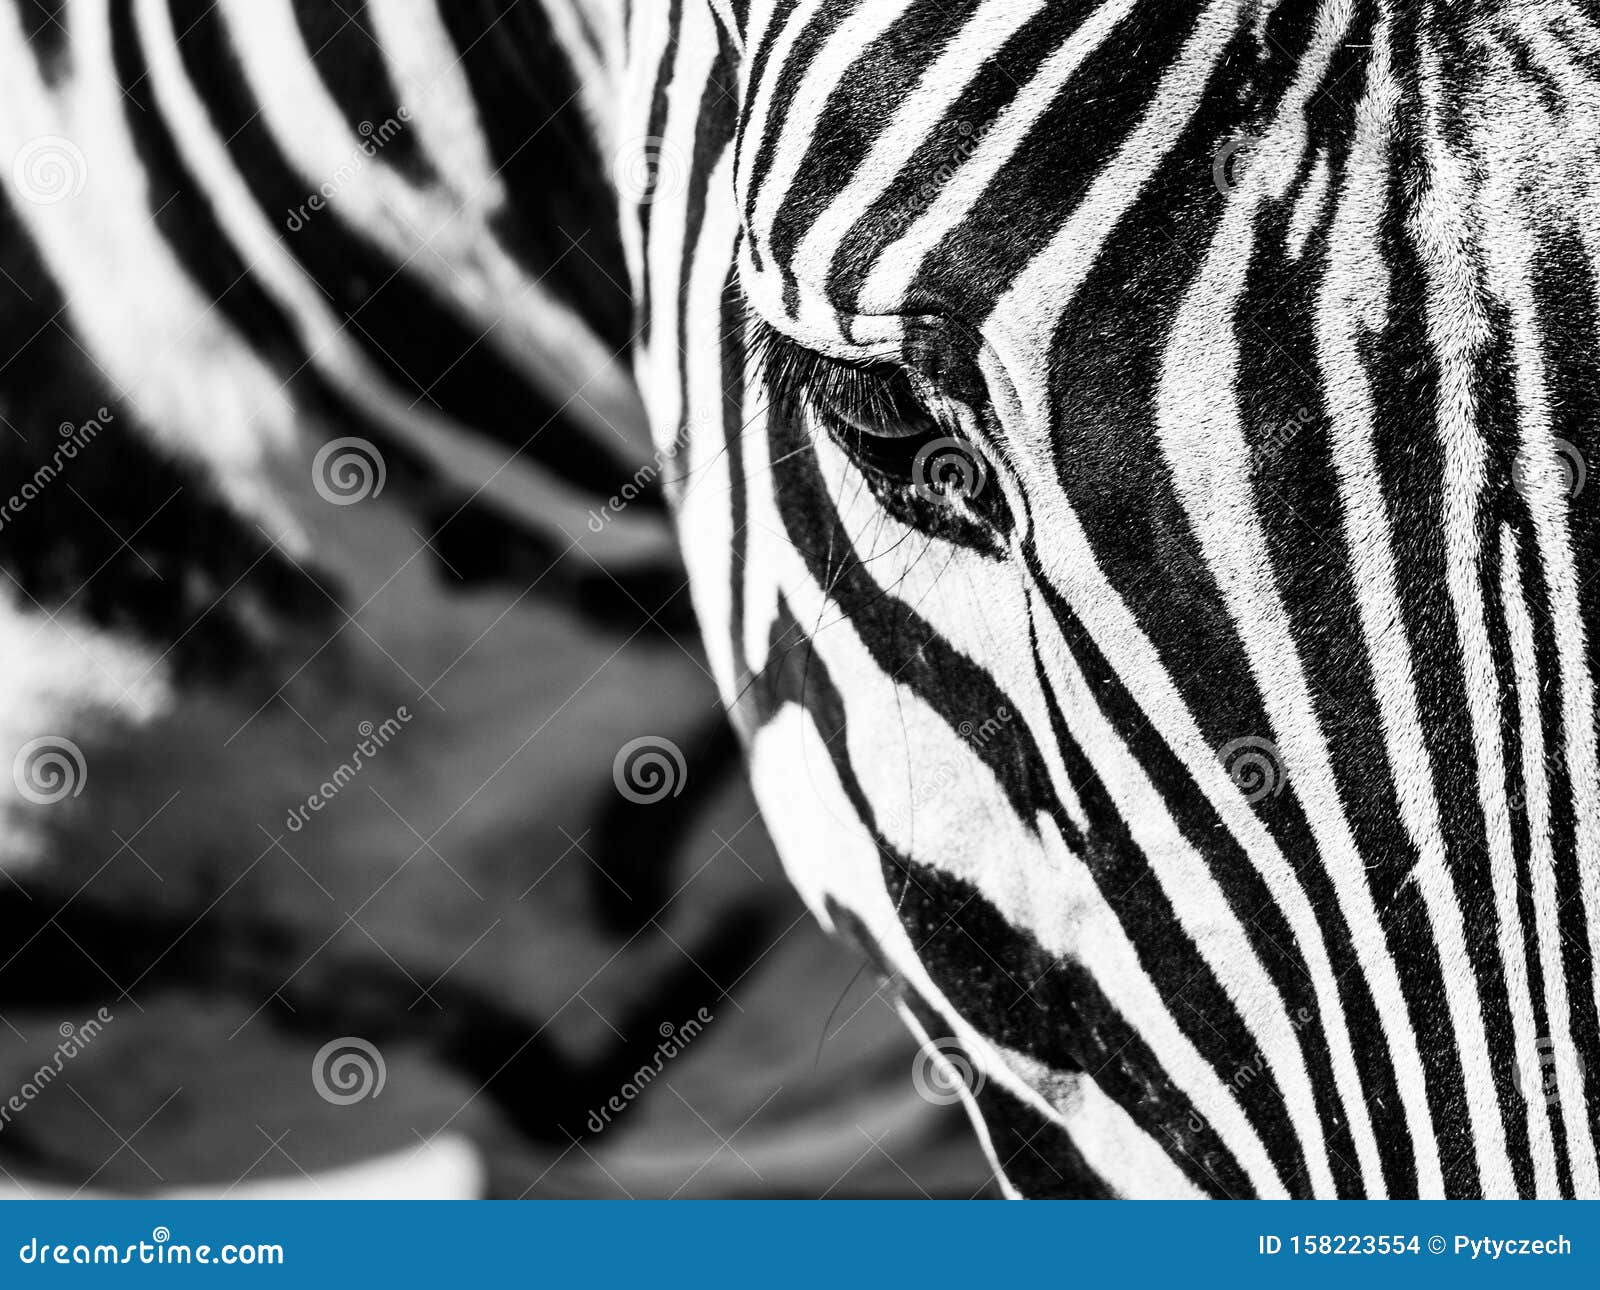 Zebra close-up portrait. Detailed view head with stripes.